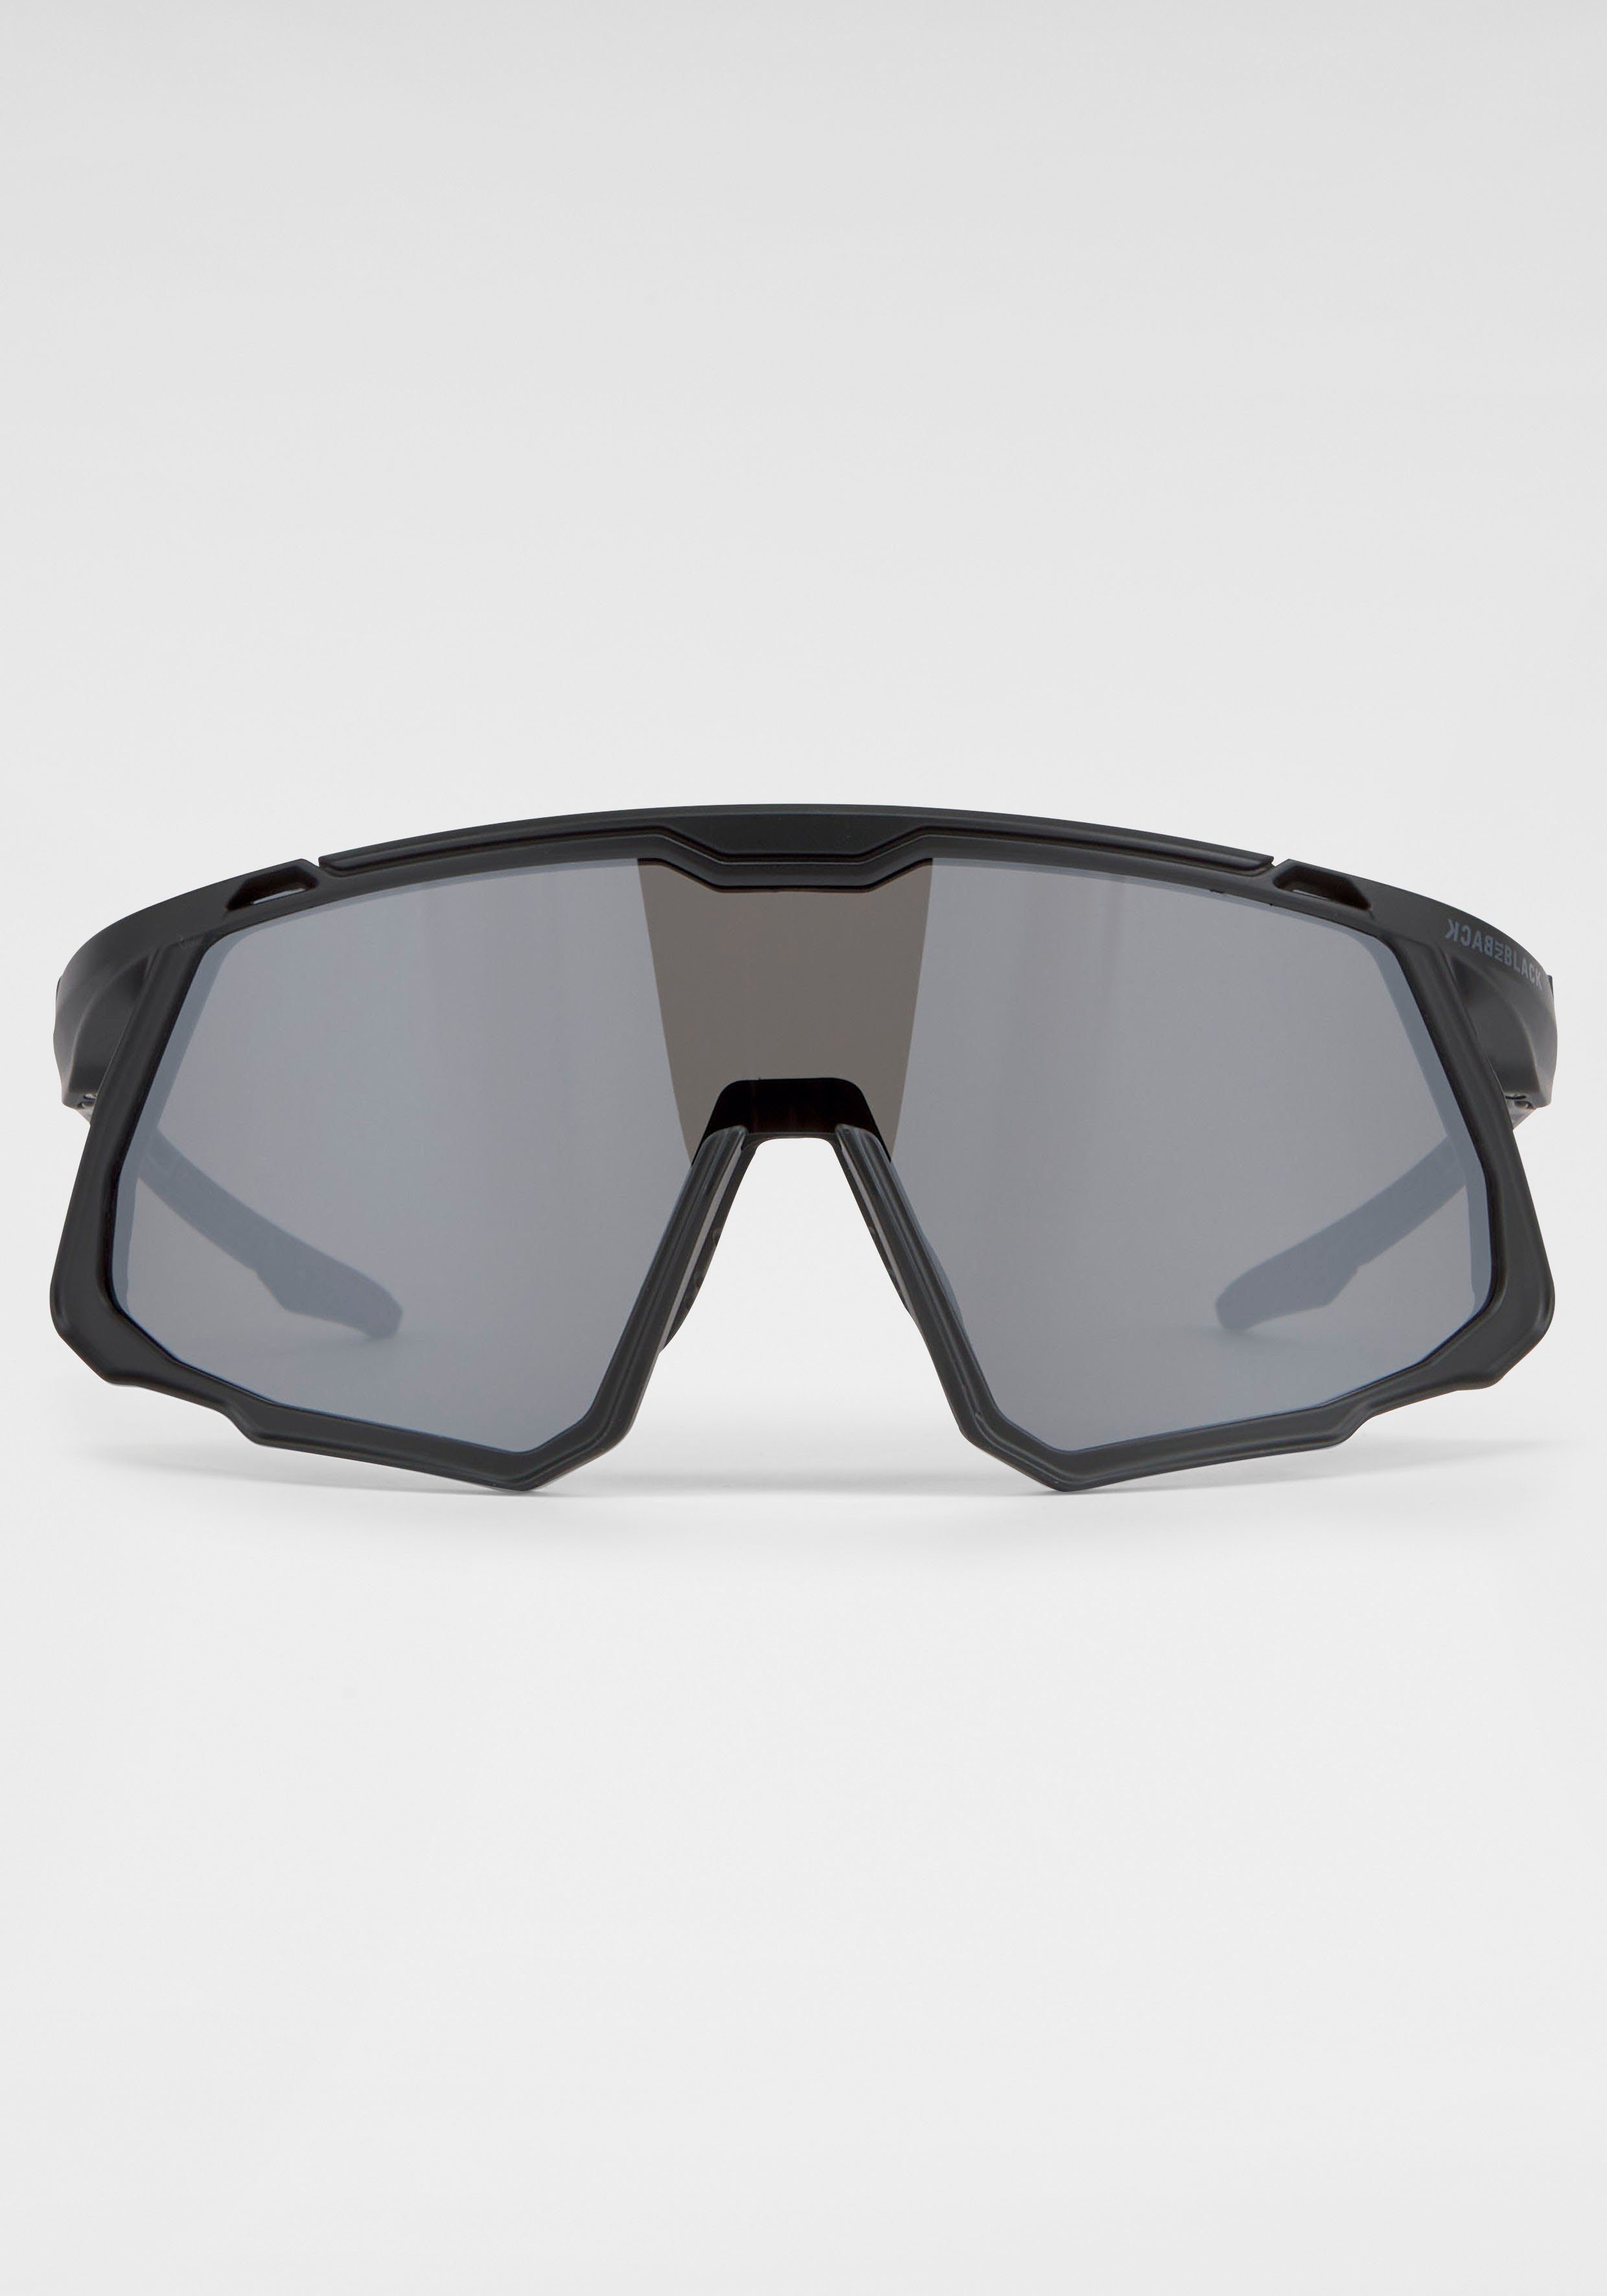 BACK IN BLACK Eyewear Sonnenbrille gebogene Form schwarz